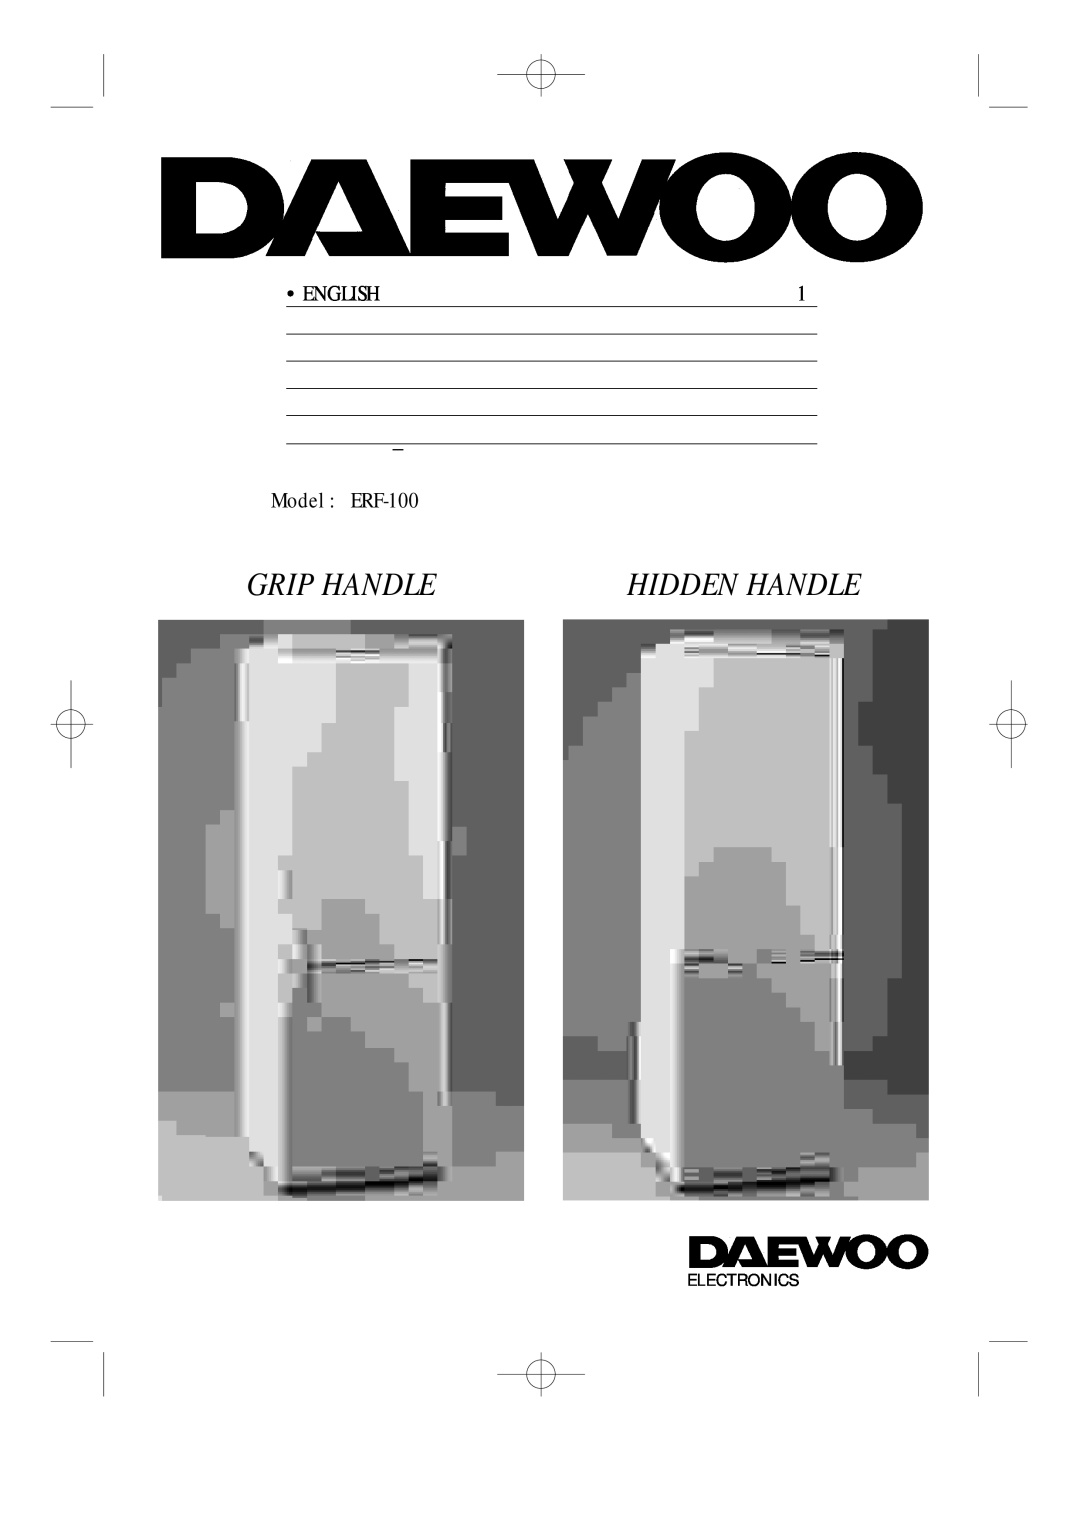 Daewoo manual Grip Handle, Hidden Handle, English, Model ERF-100, Electronics 